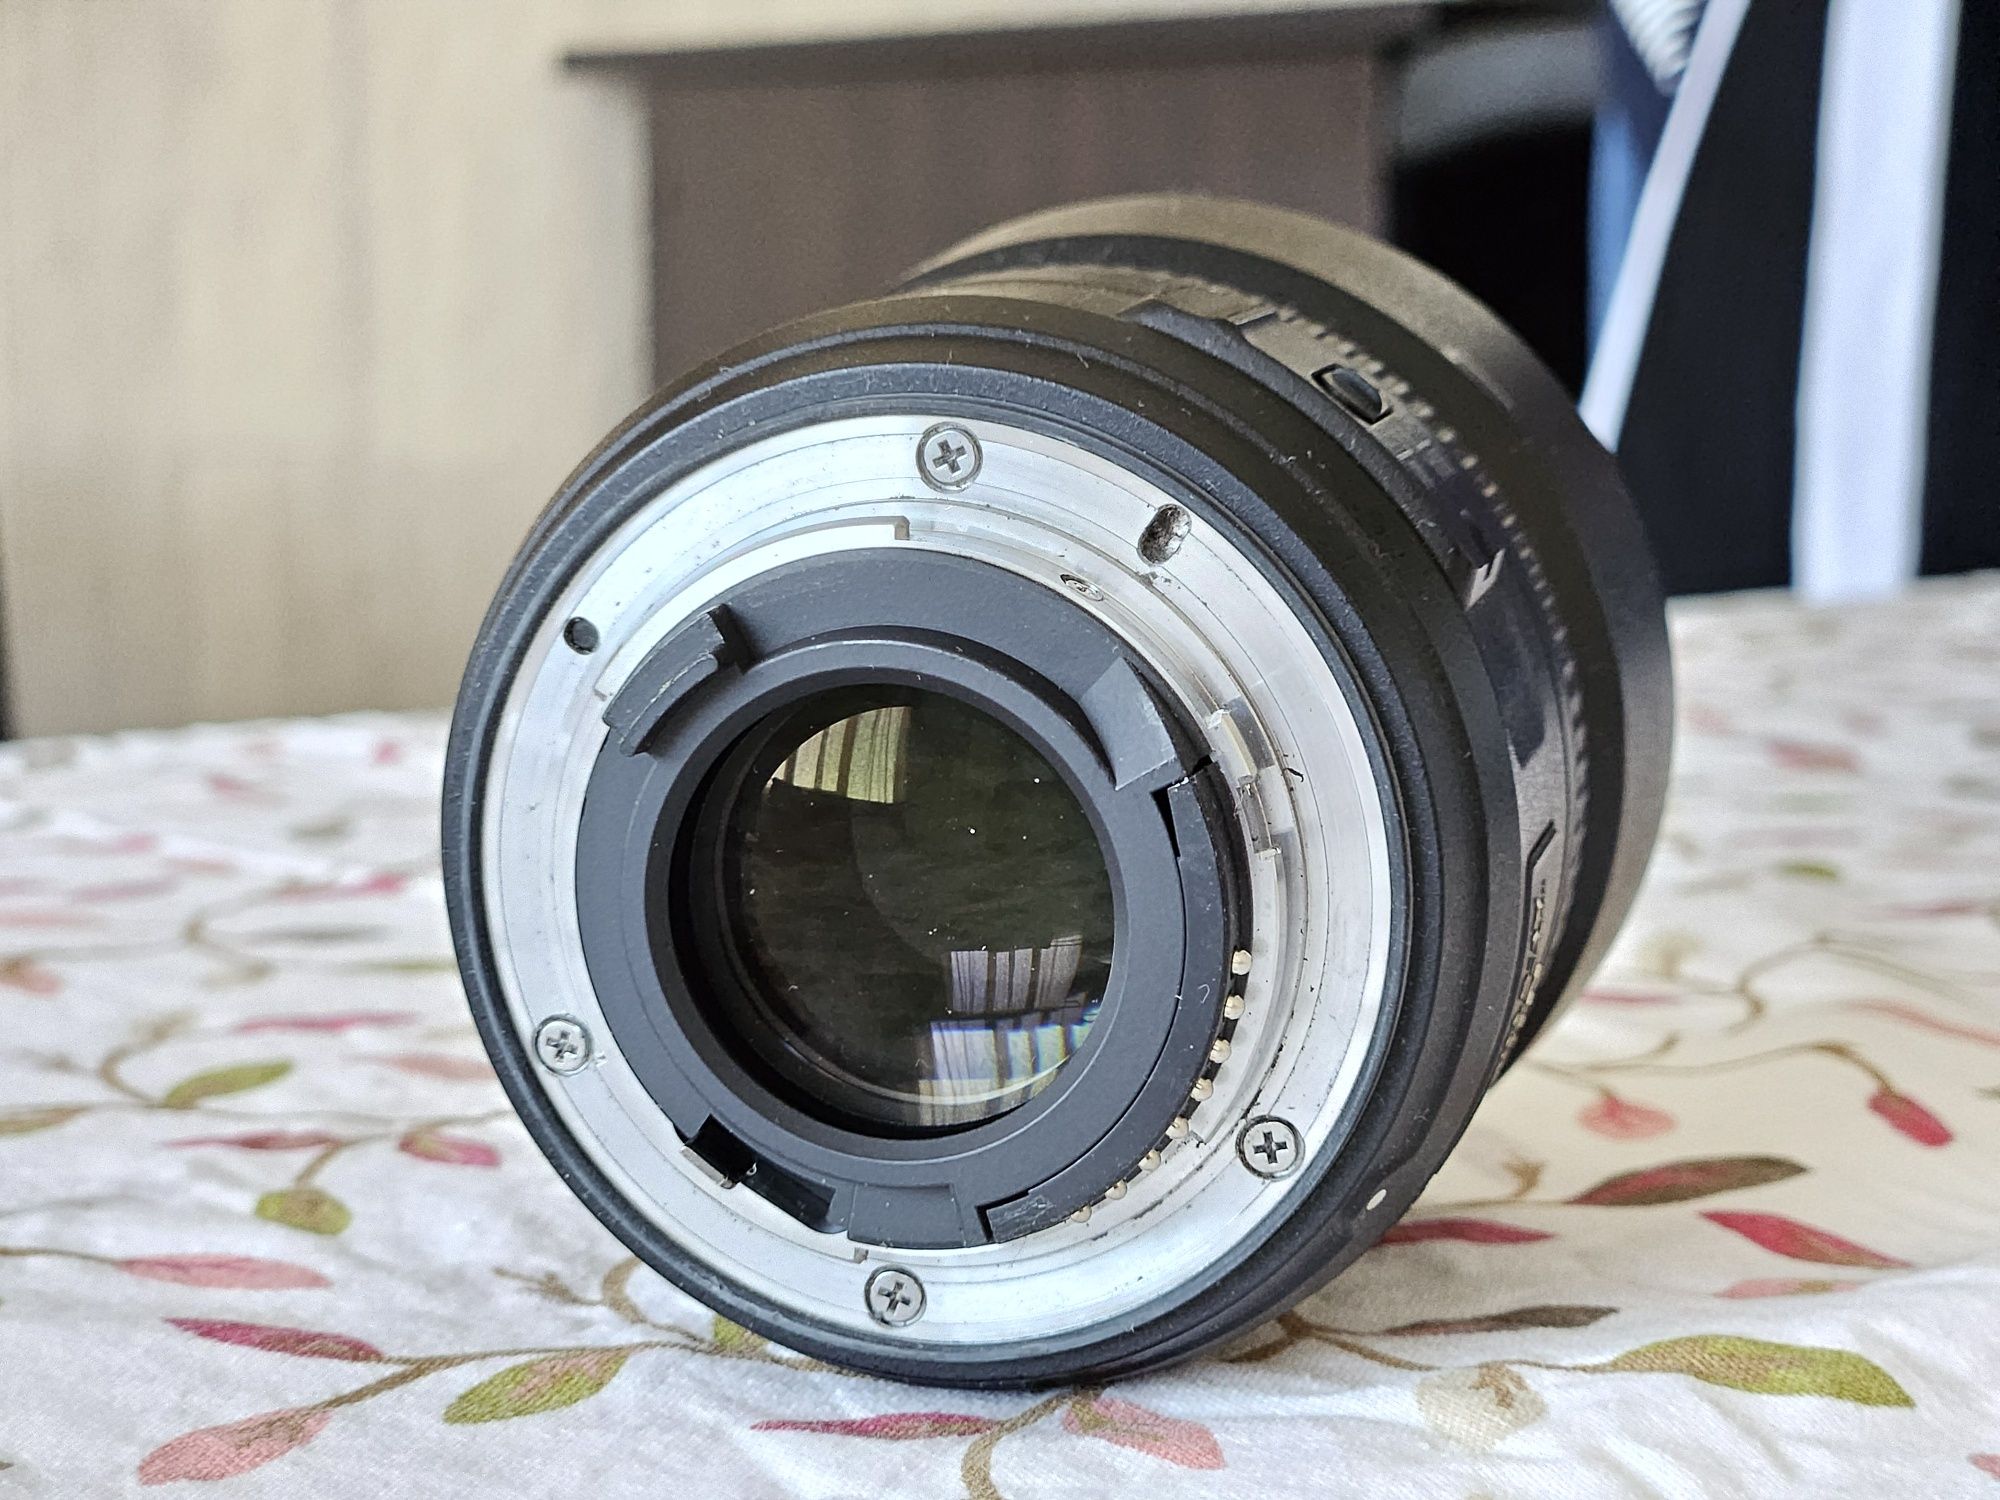 Nikon dx 35mm 1.8f